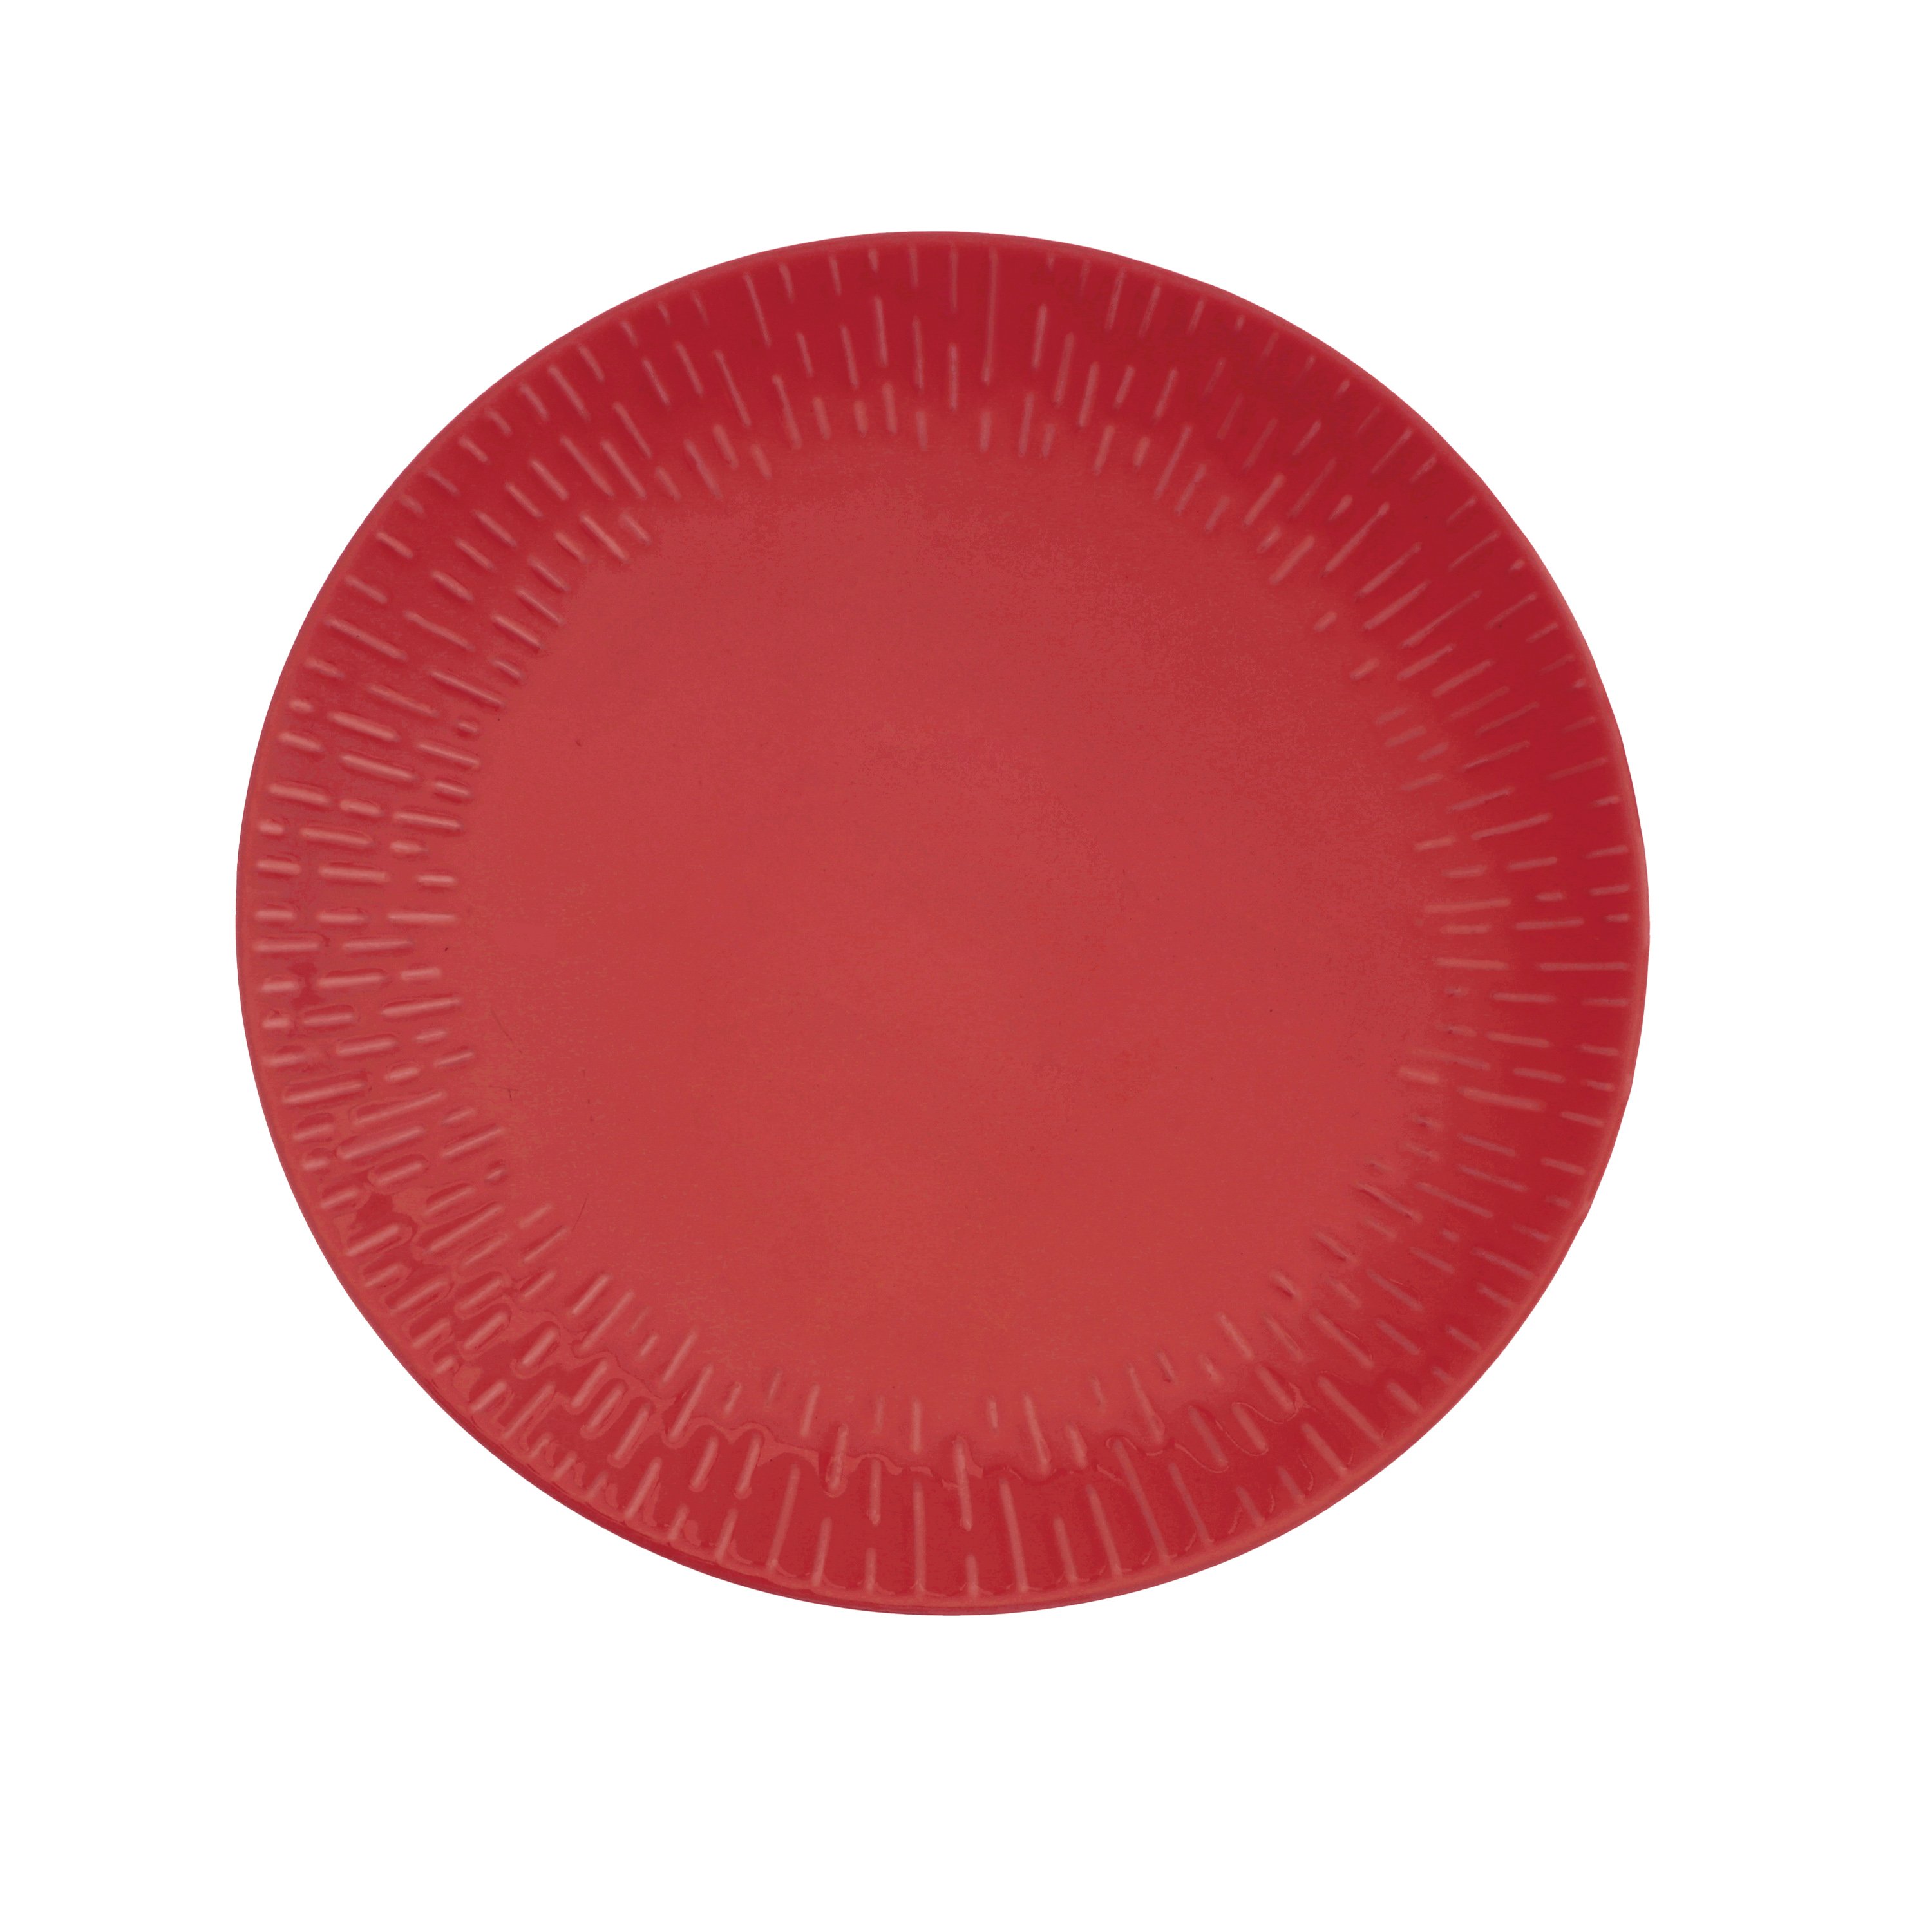 Aida - Life in Colour - Confetti - Chili dinner plate w/relief porcelain (13463)